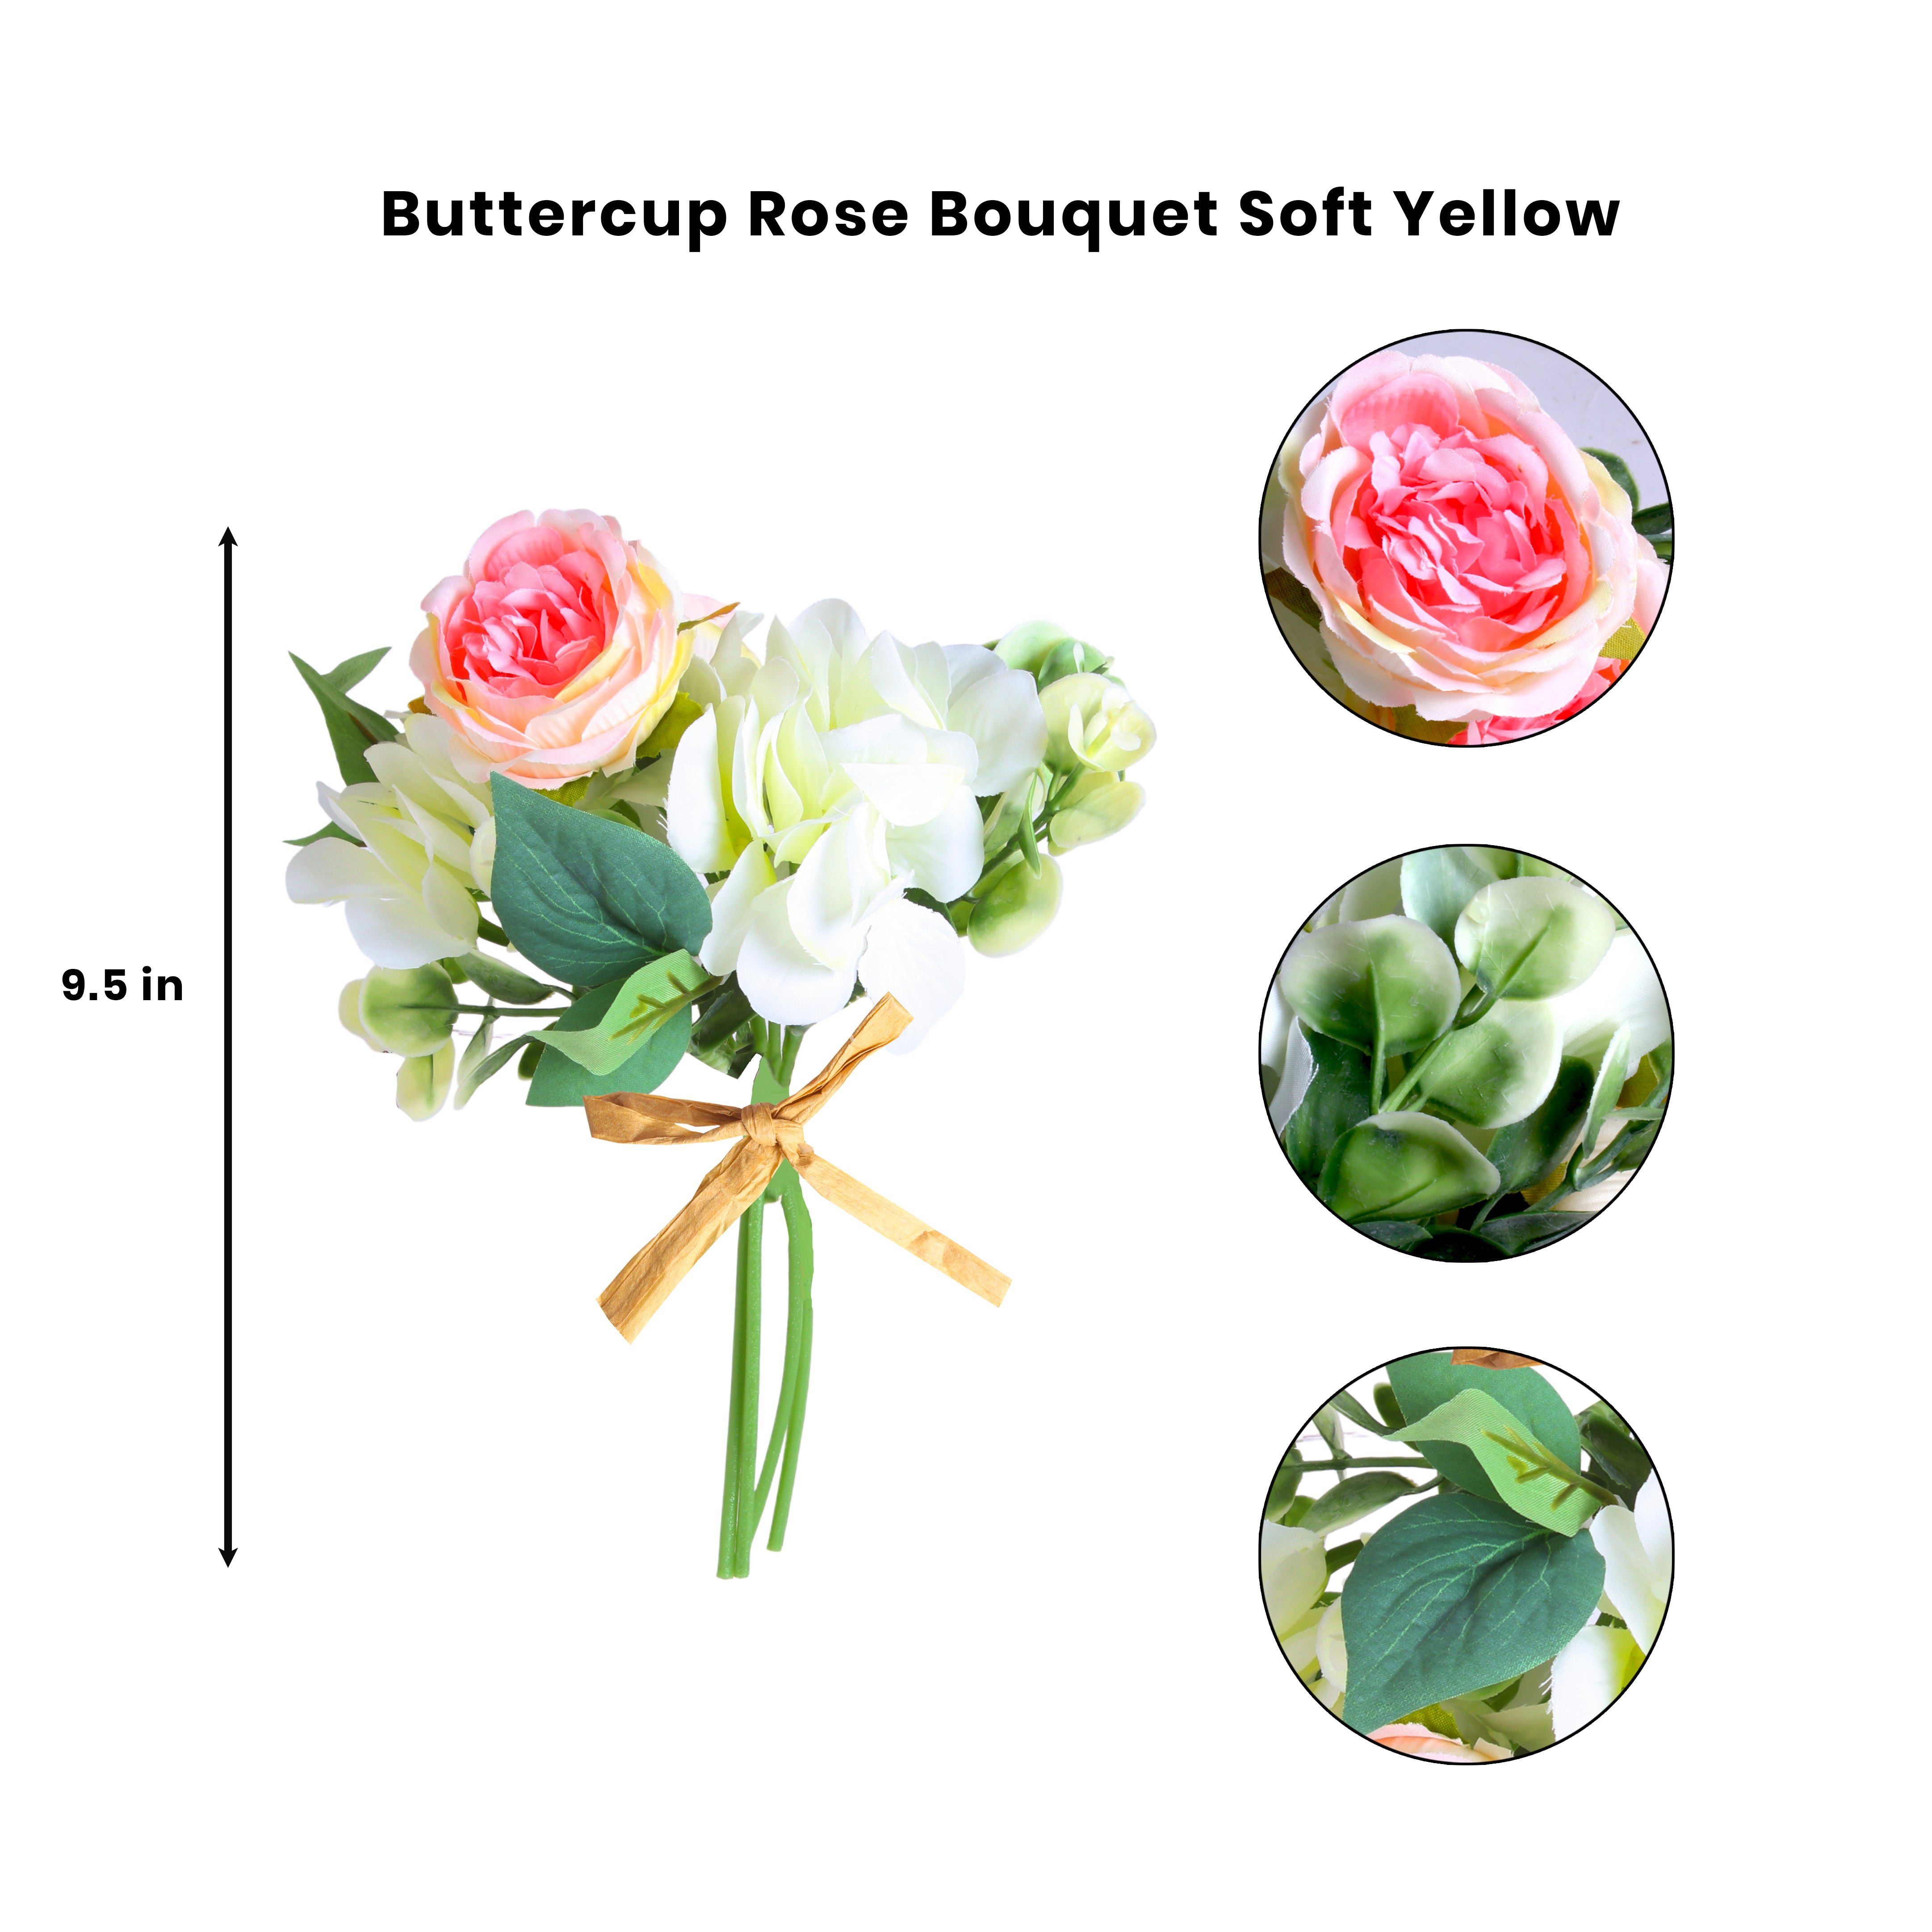 Artificial Flower Buttercup Rose Bouquet Soft Yellow 9.5Inch